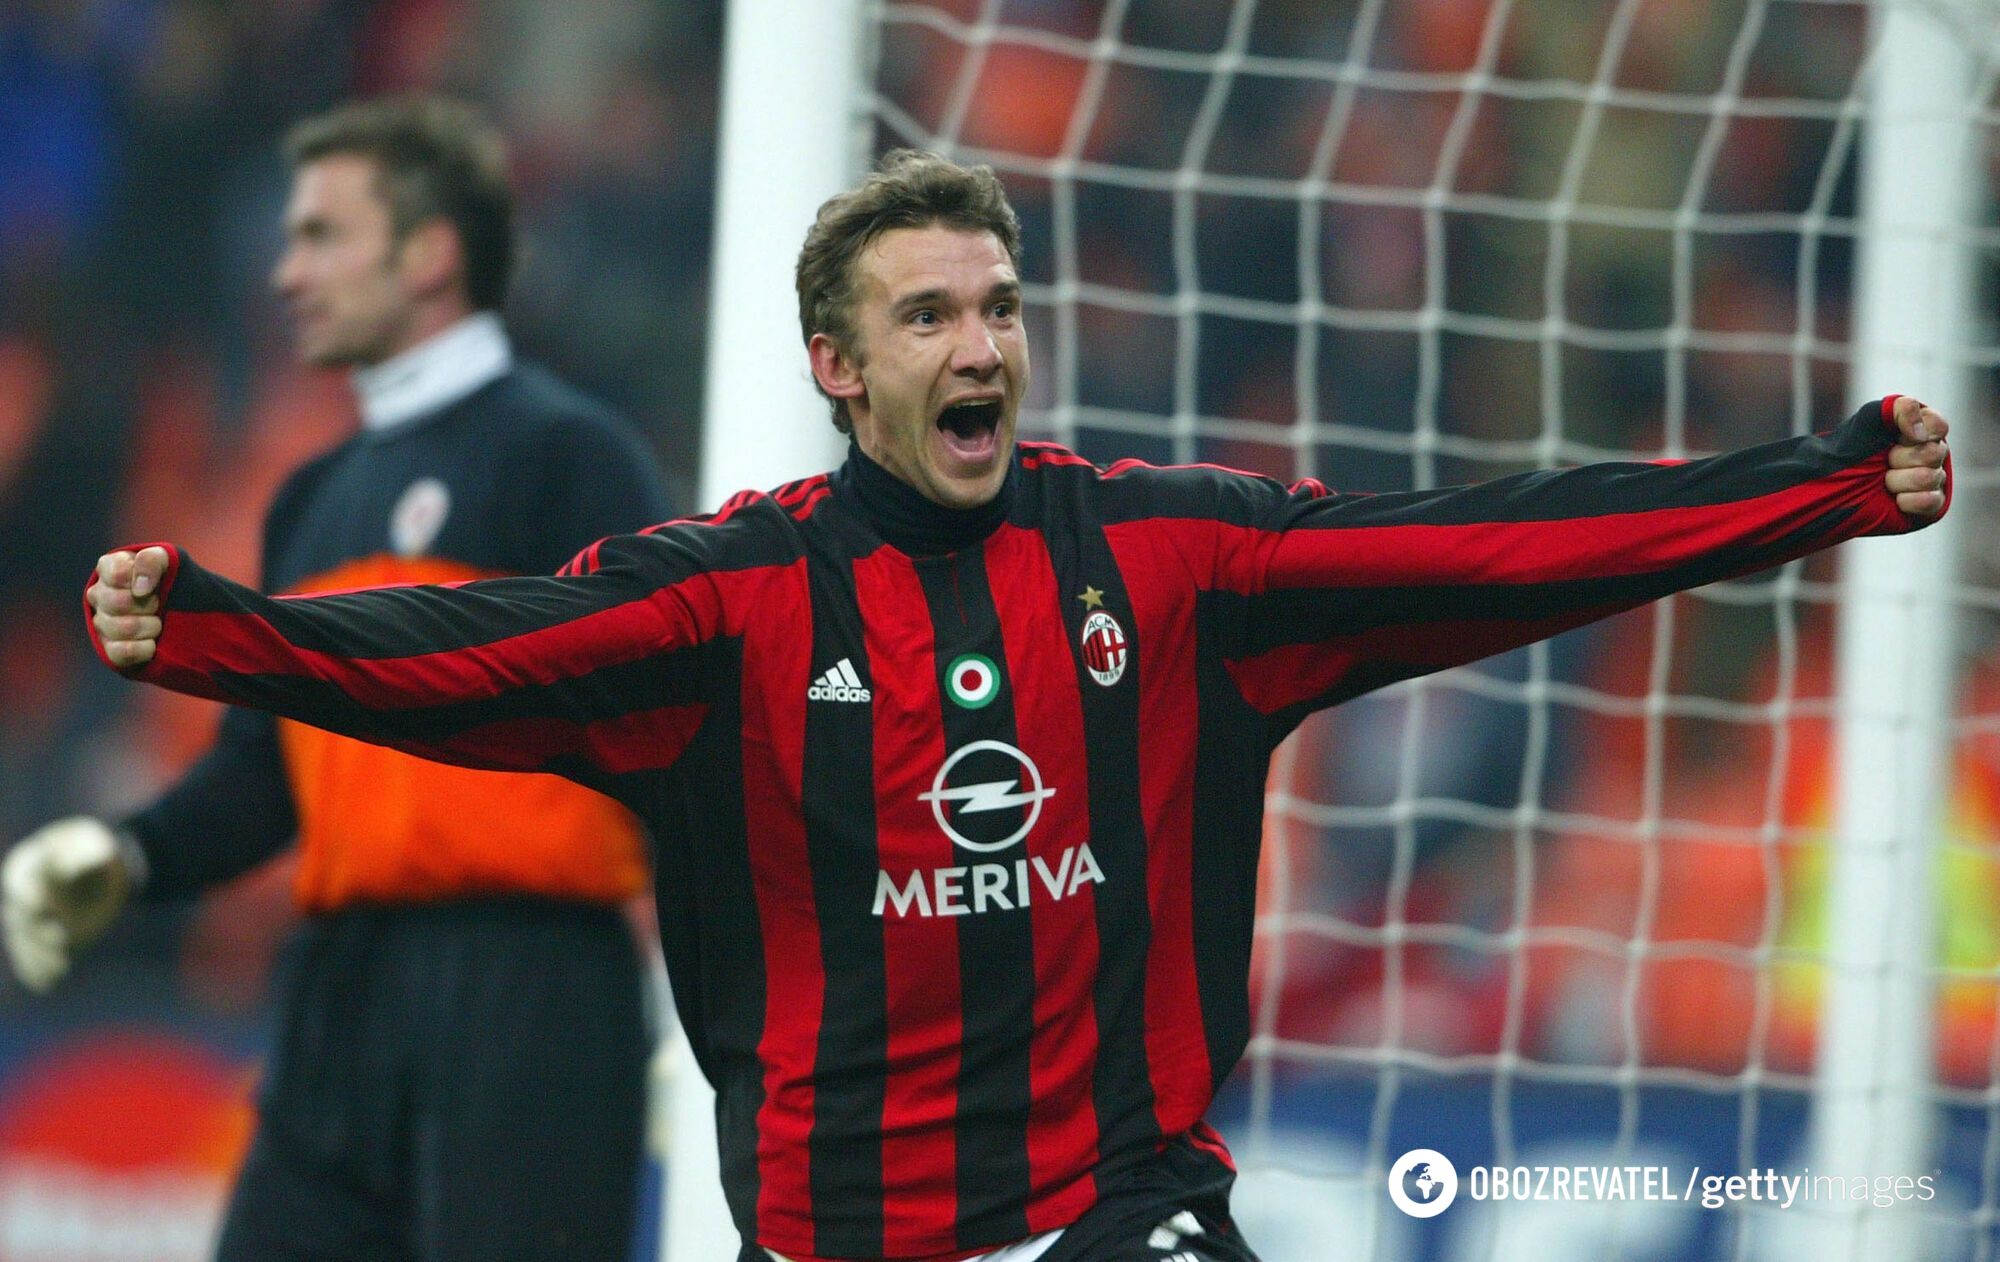 Shevchenko became a star at AC Milan